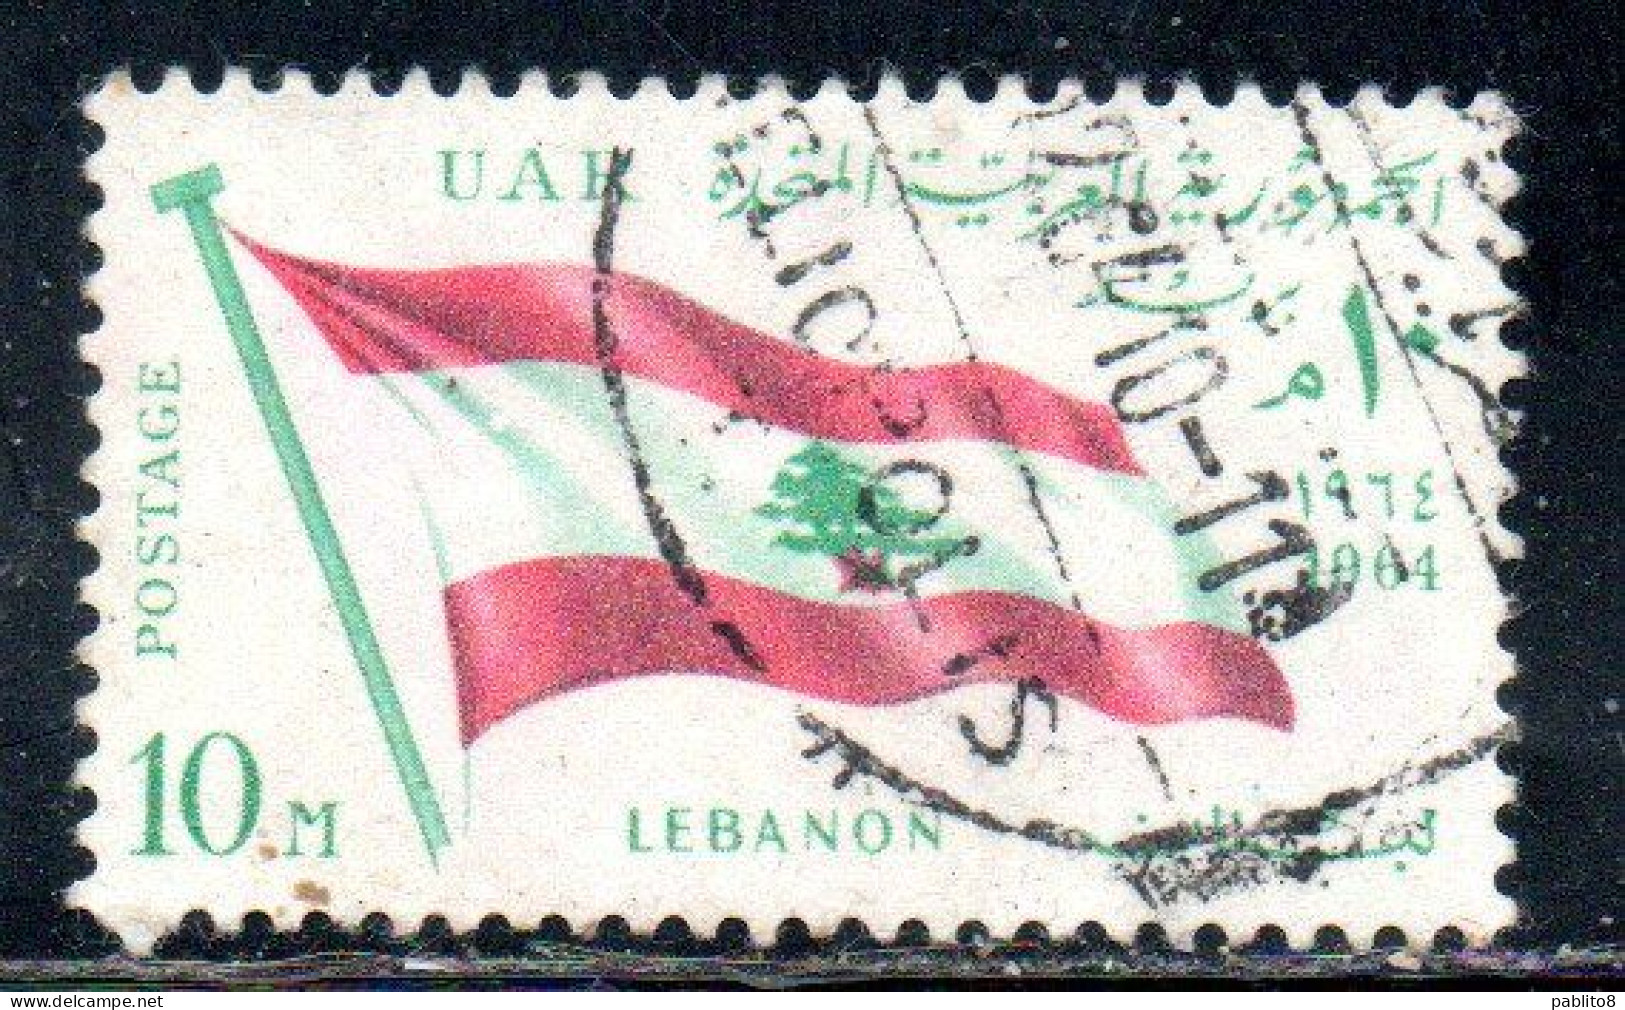 UAR EGYPT EGITTO 1964 SECOND MEETING OF HEADS STATE ARAB LEAGUE FLAG OF LEBANON 10m USED USATO OBLITERE' - Usati